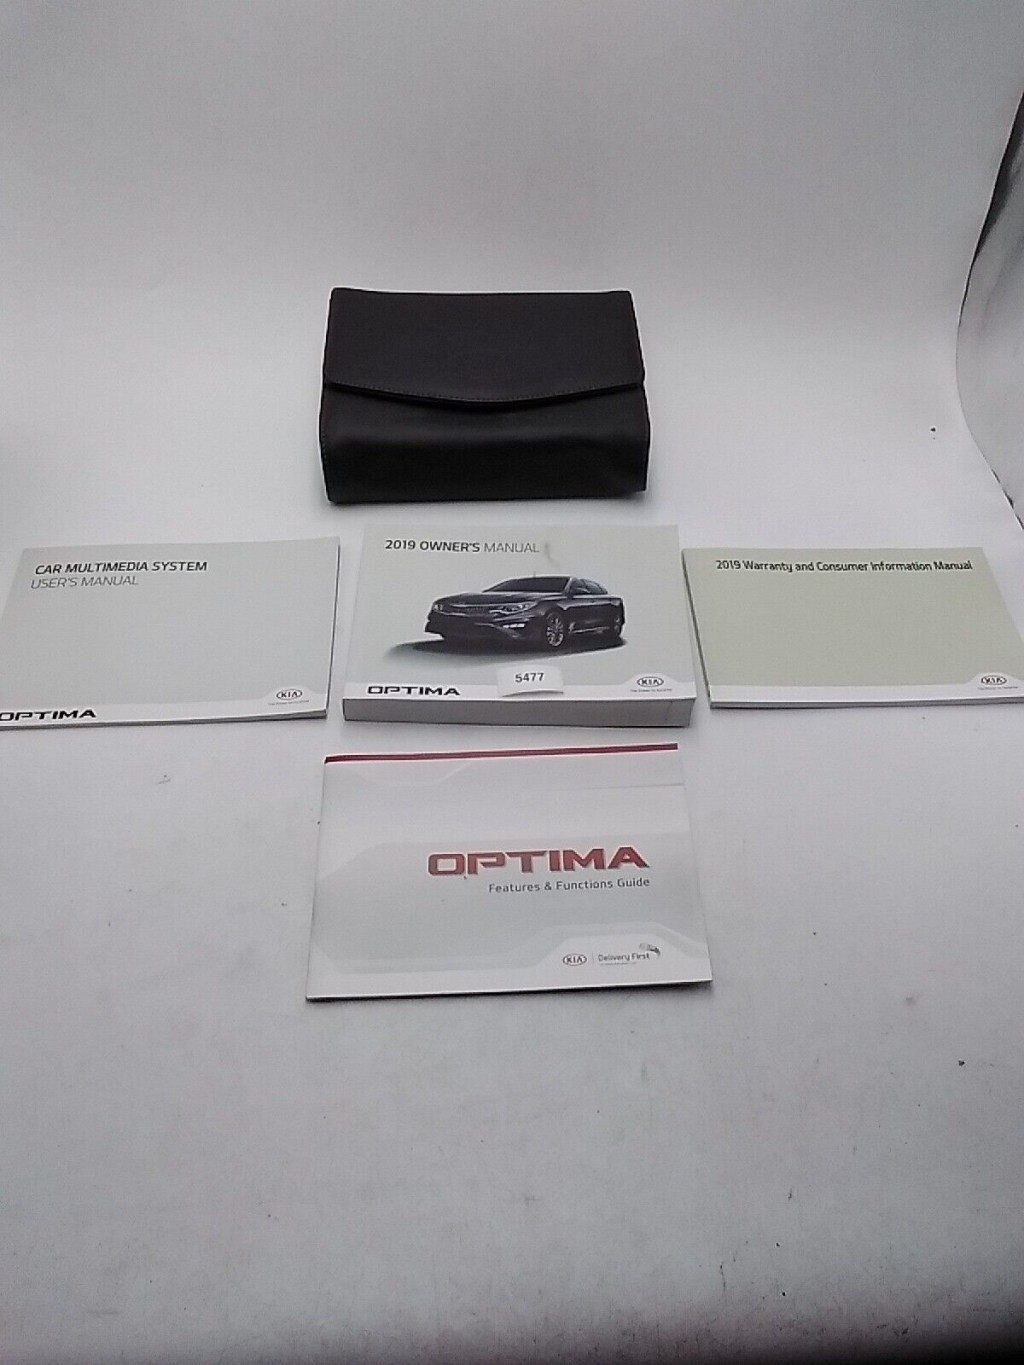 kia optima 2019 owners manual - Kia Optima Owners Manual